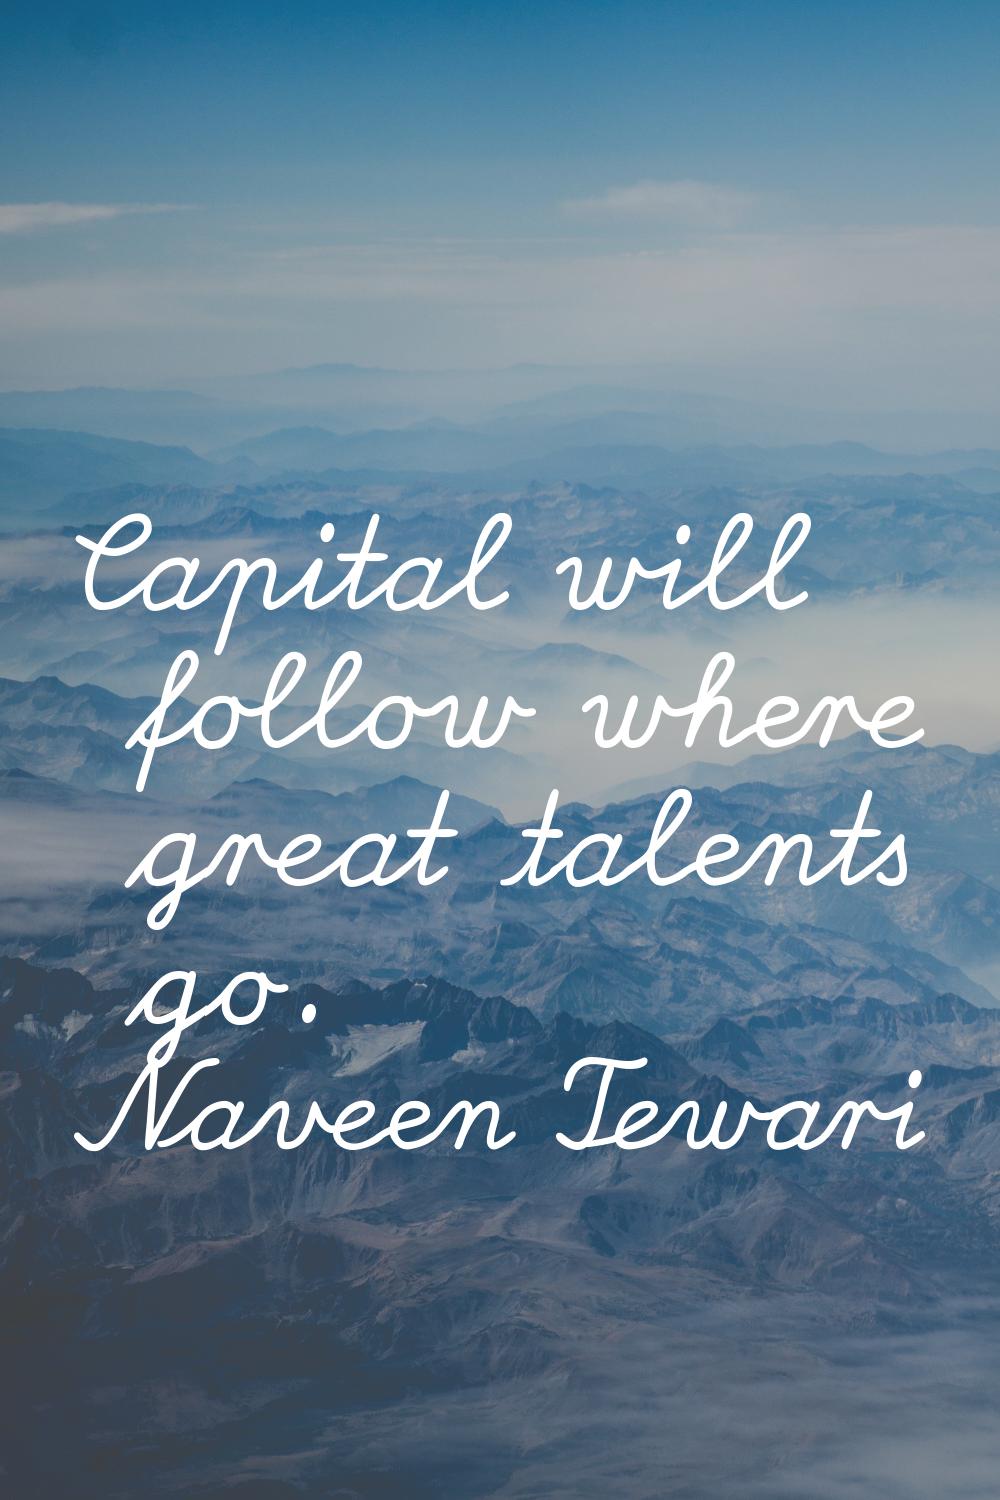 Capital will follow where great talents go.